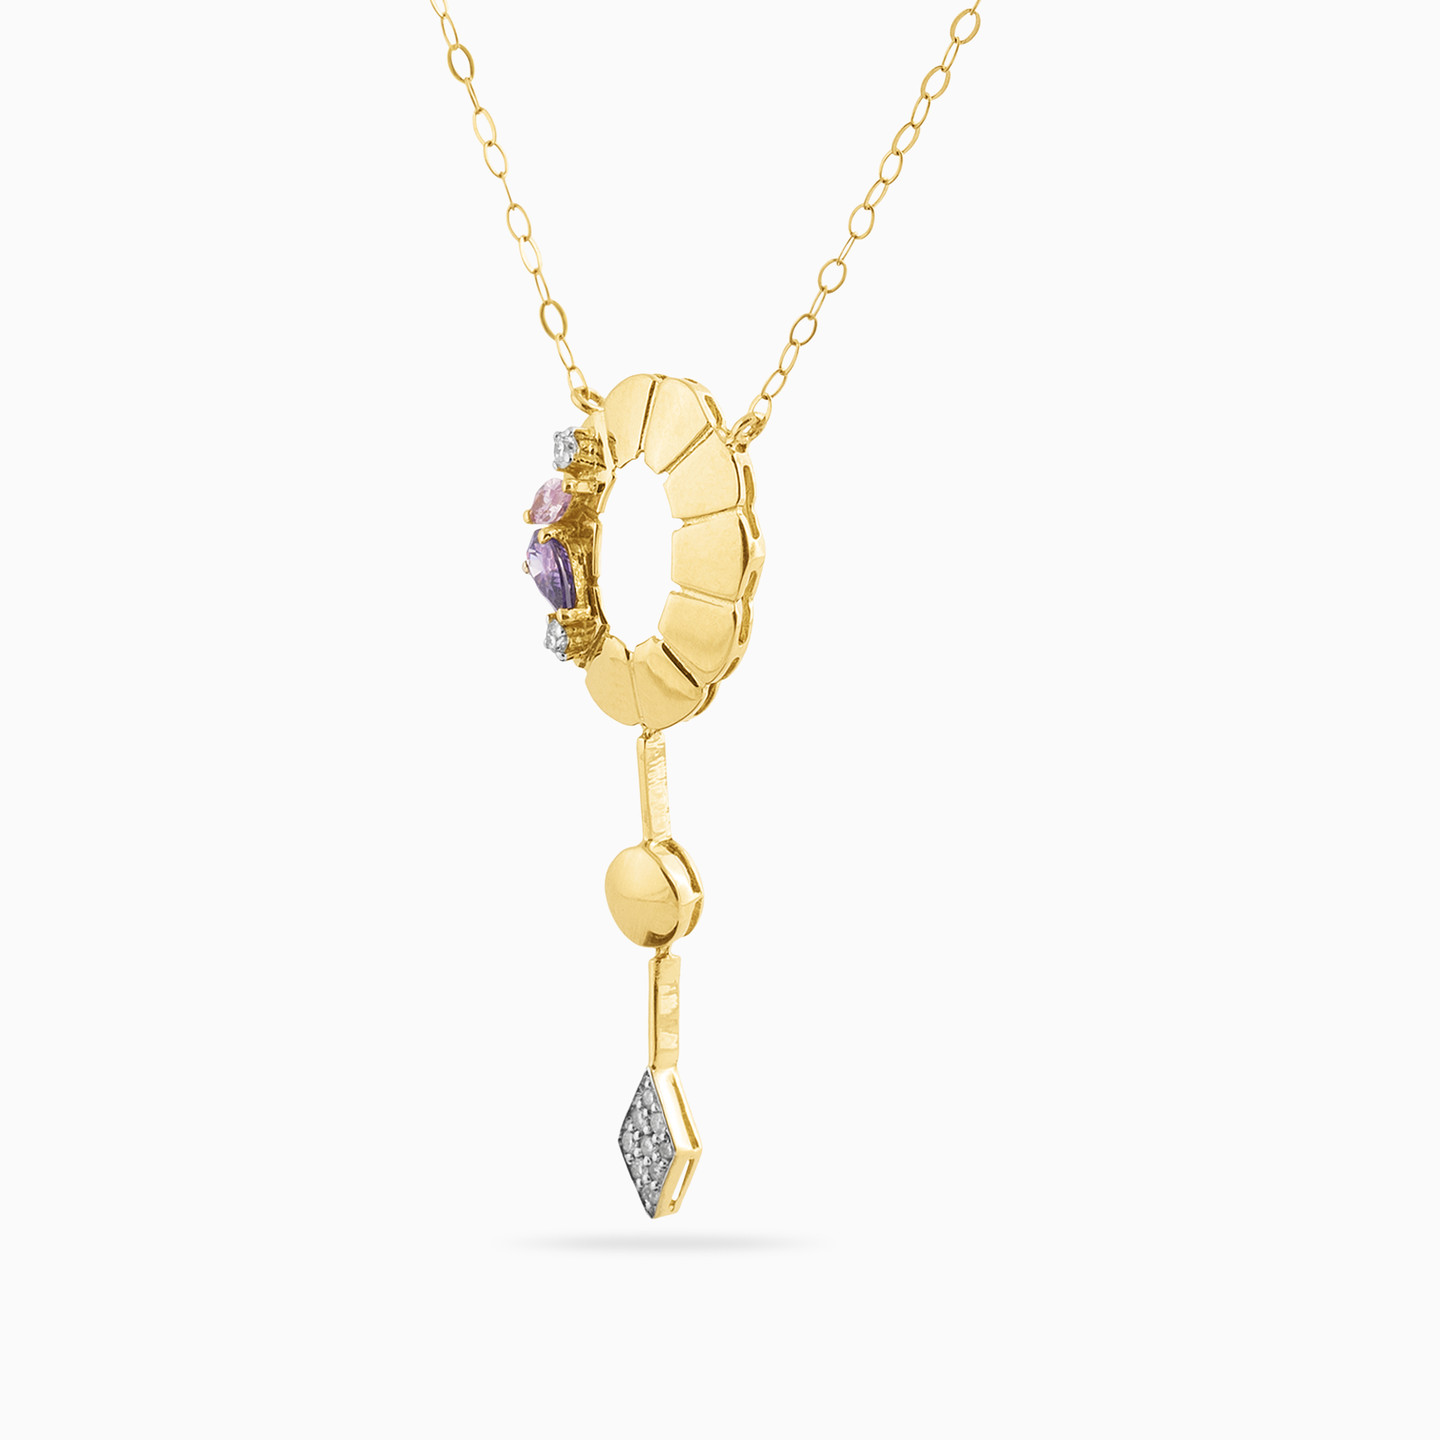 18K Gold Diamond & Colored Stones Drop Pendant Necklace - 2